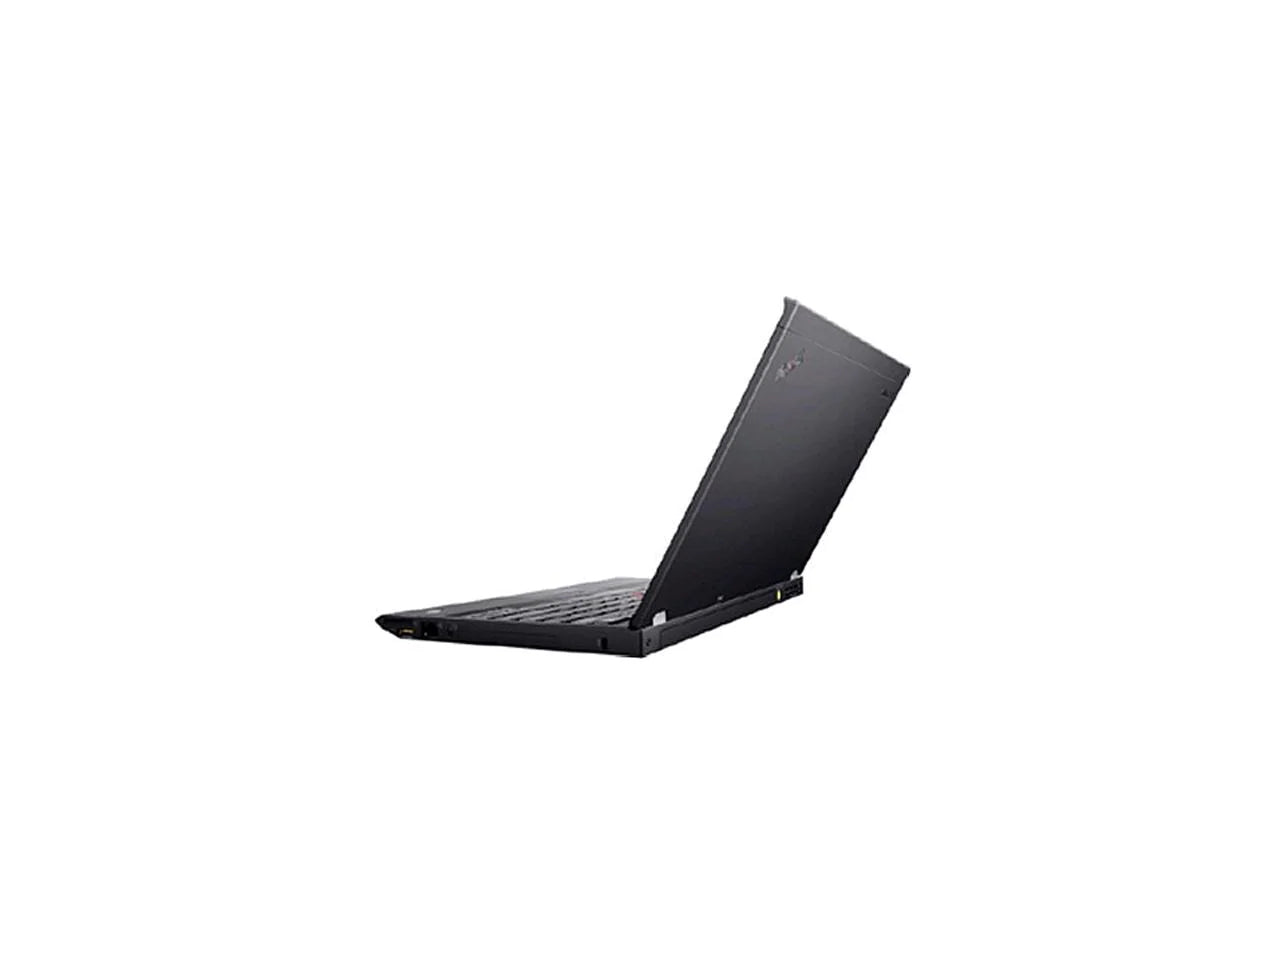 Lenovo ThinkPad T430 i5-3320M 2.60GHz 8GB RAM 1TB HDD Intel HD 4000 Webcam Win 10 Pro